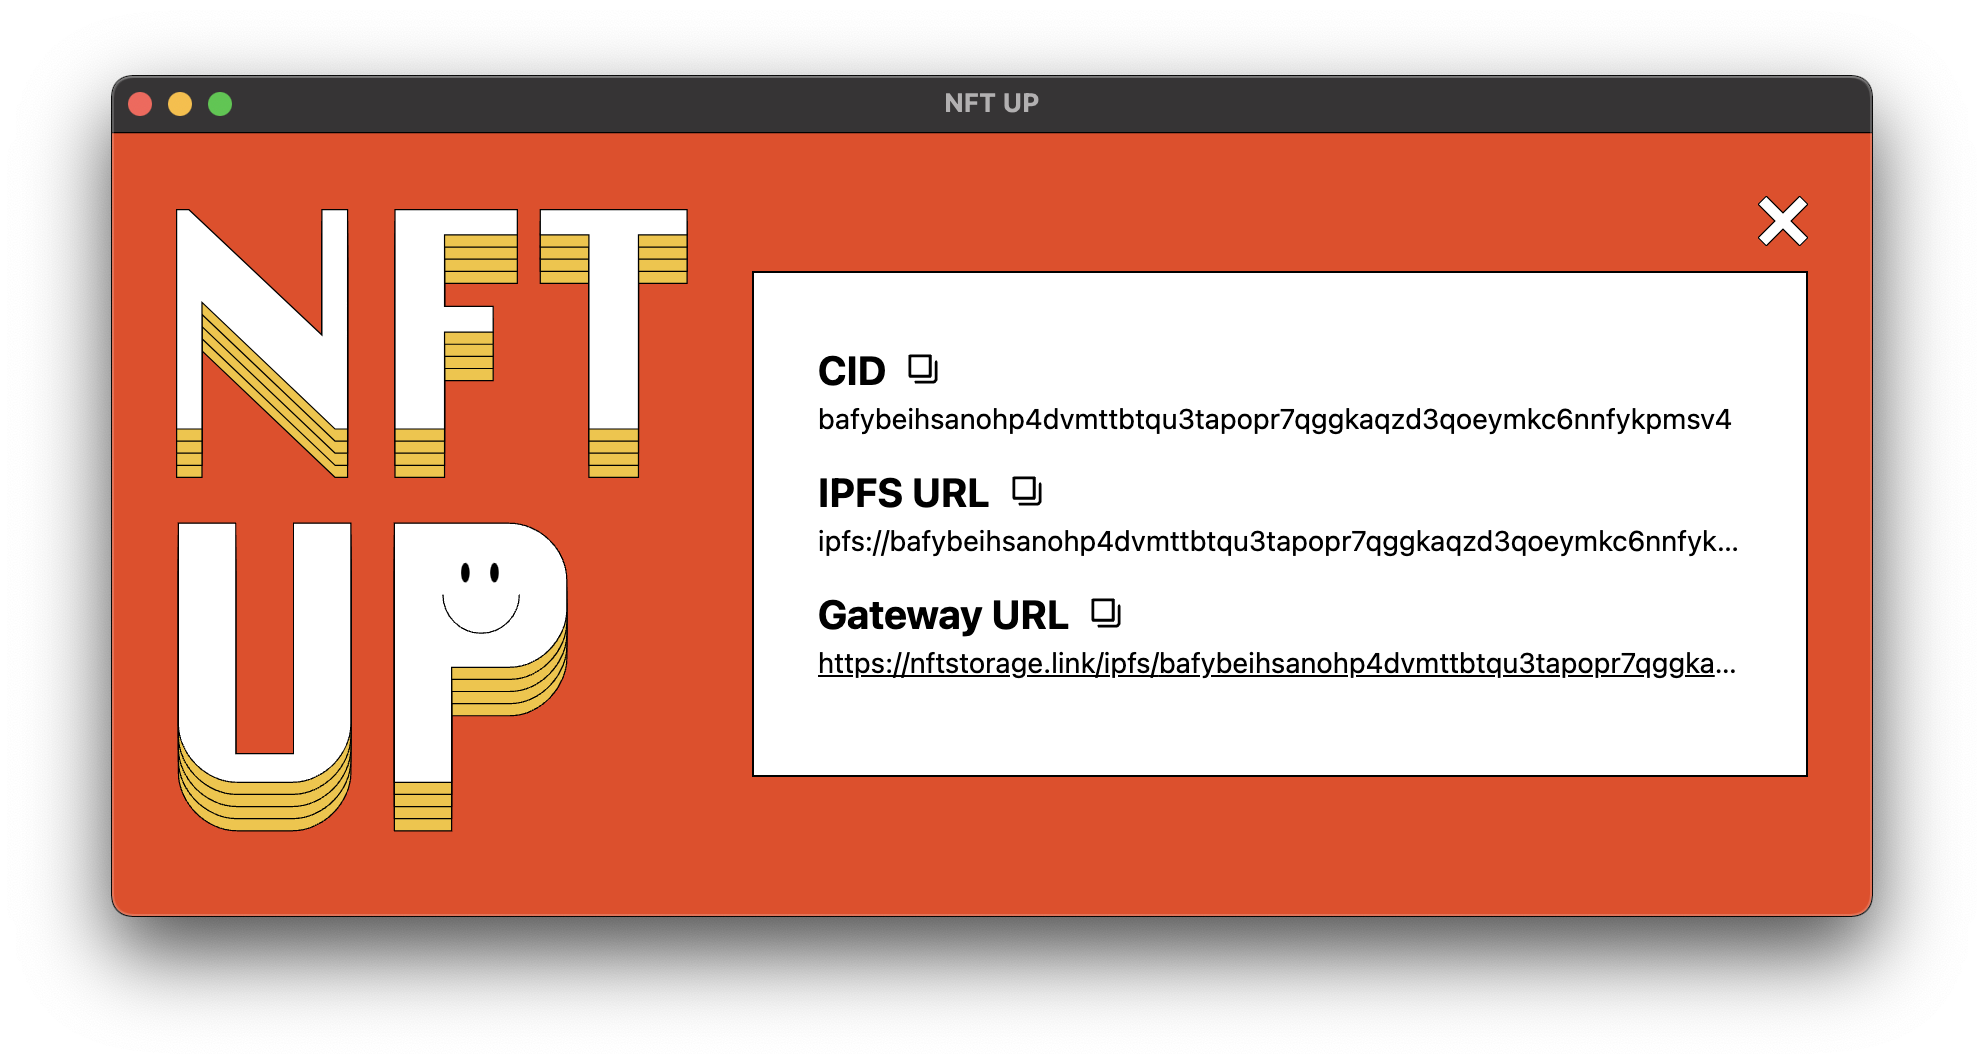 screenshot of file details showing CID, IPFS URL and Gateway URL